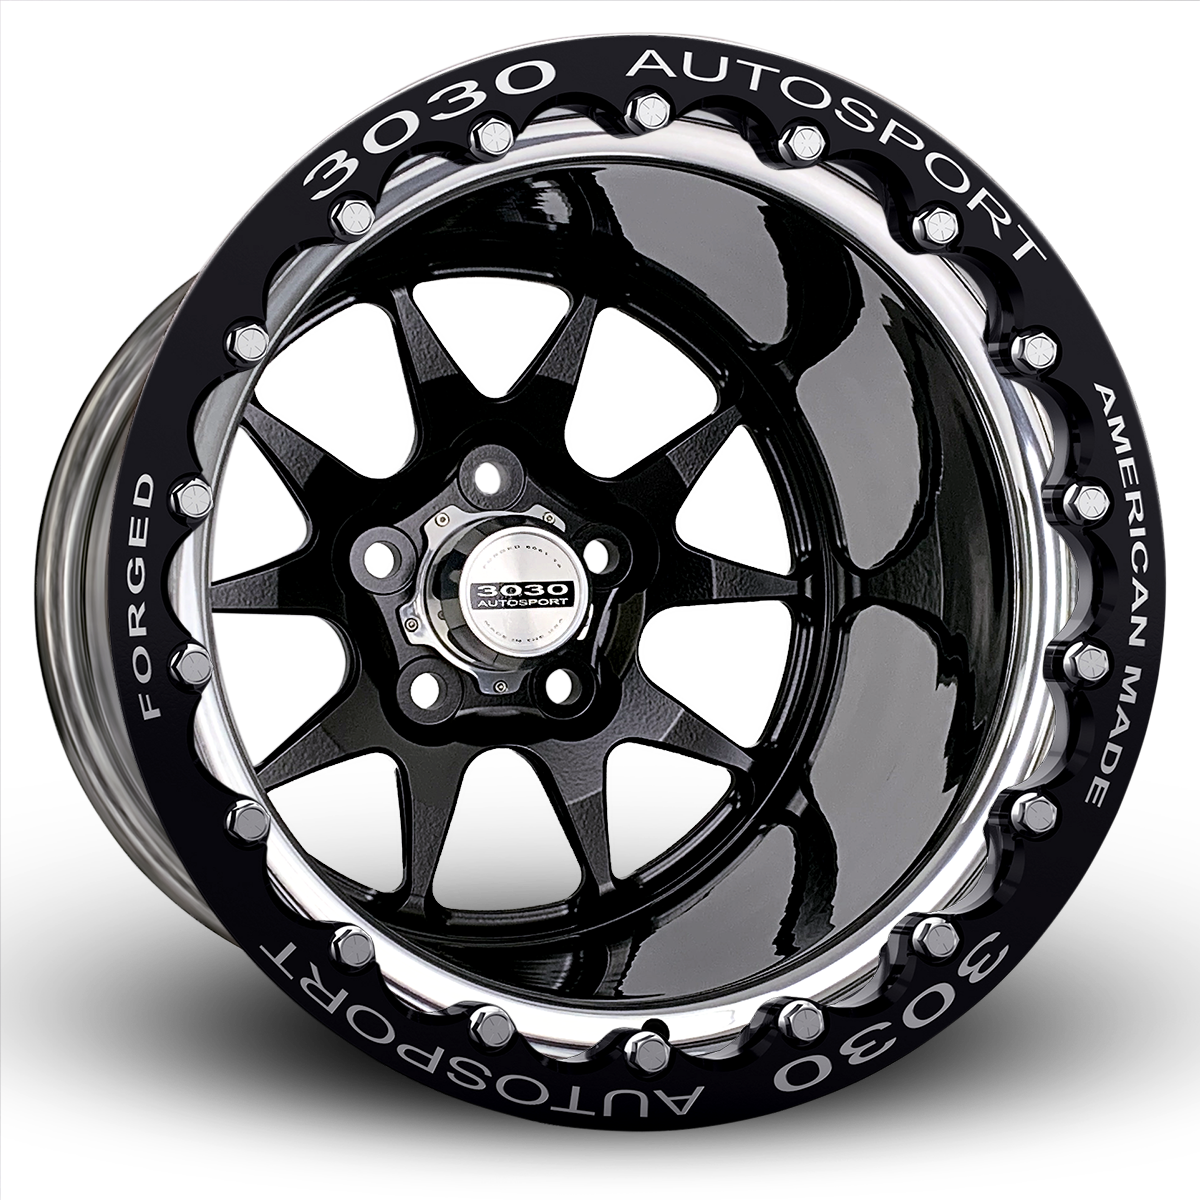 MACH-10 Double-Beadlock Wheel, Size: 15x9", Bolt Pattern: 5x4.5", Backspace: 5" [Black/Polished]